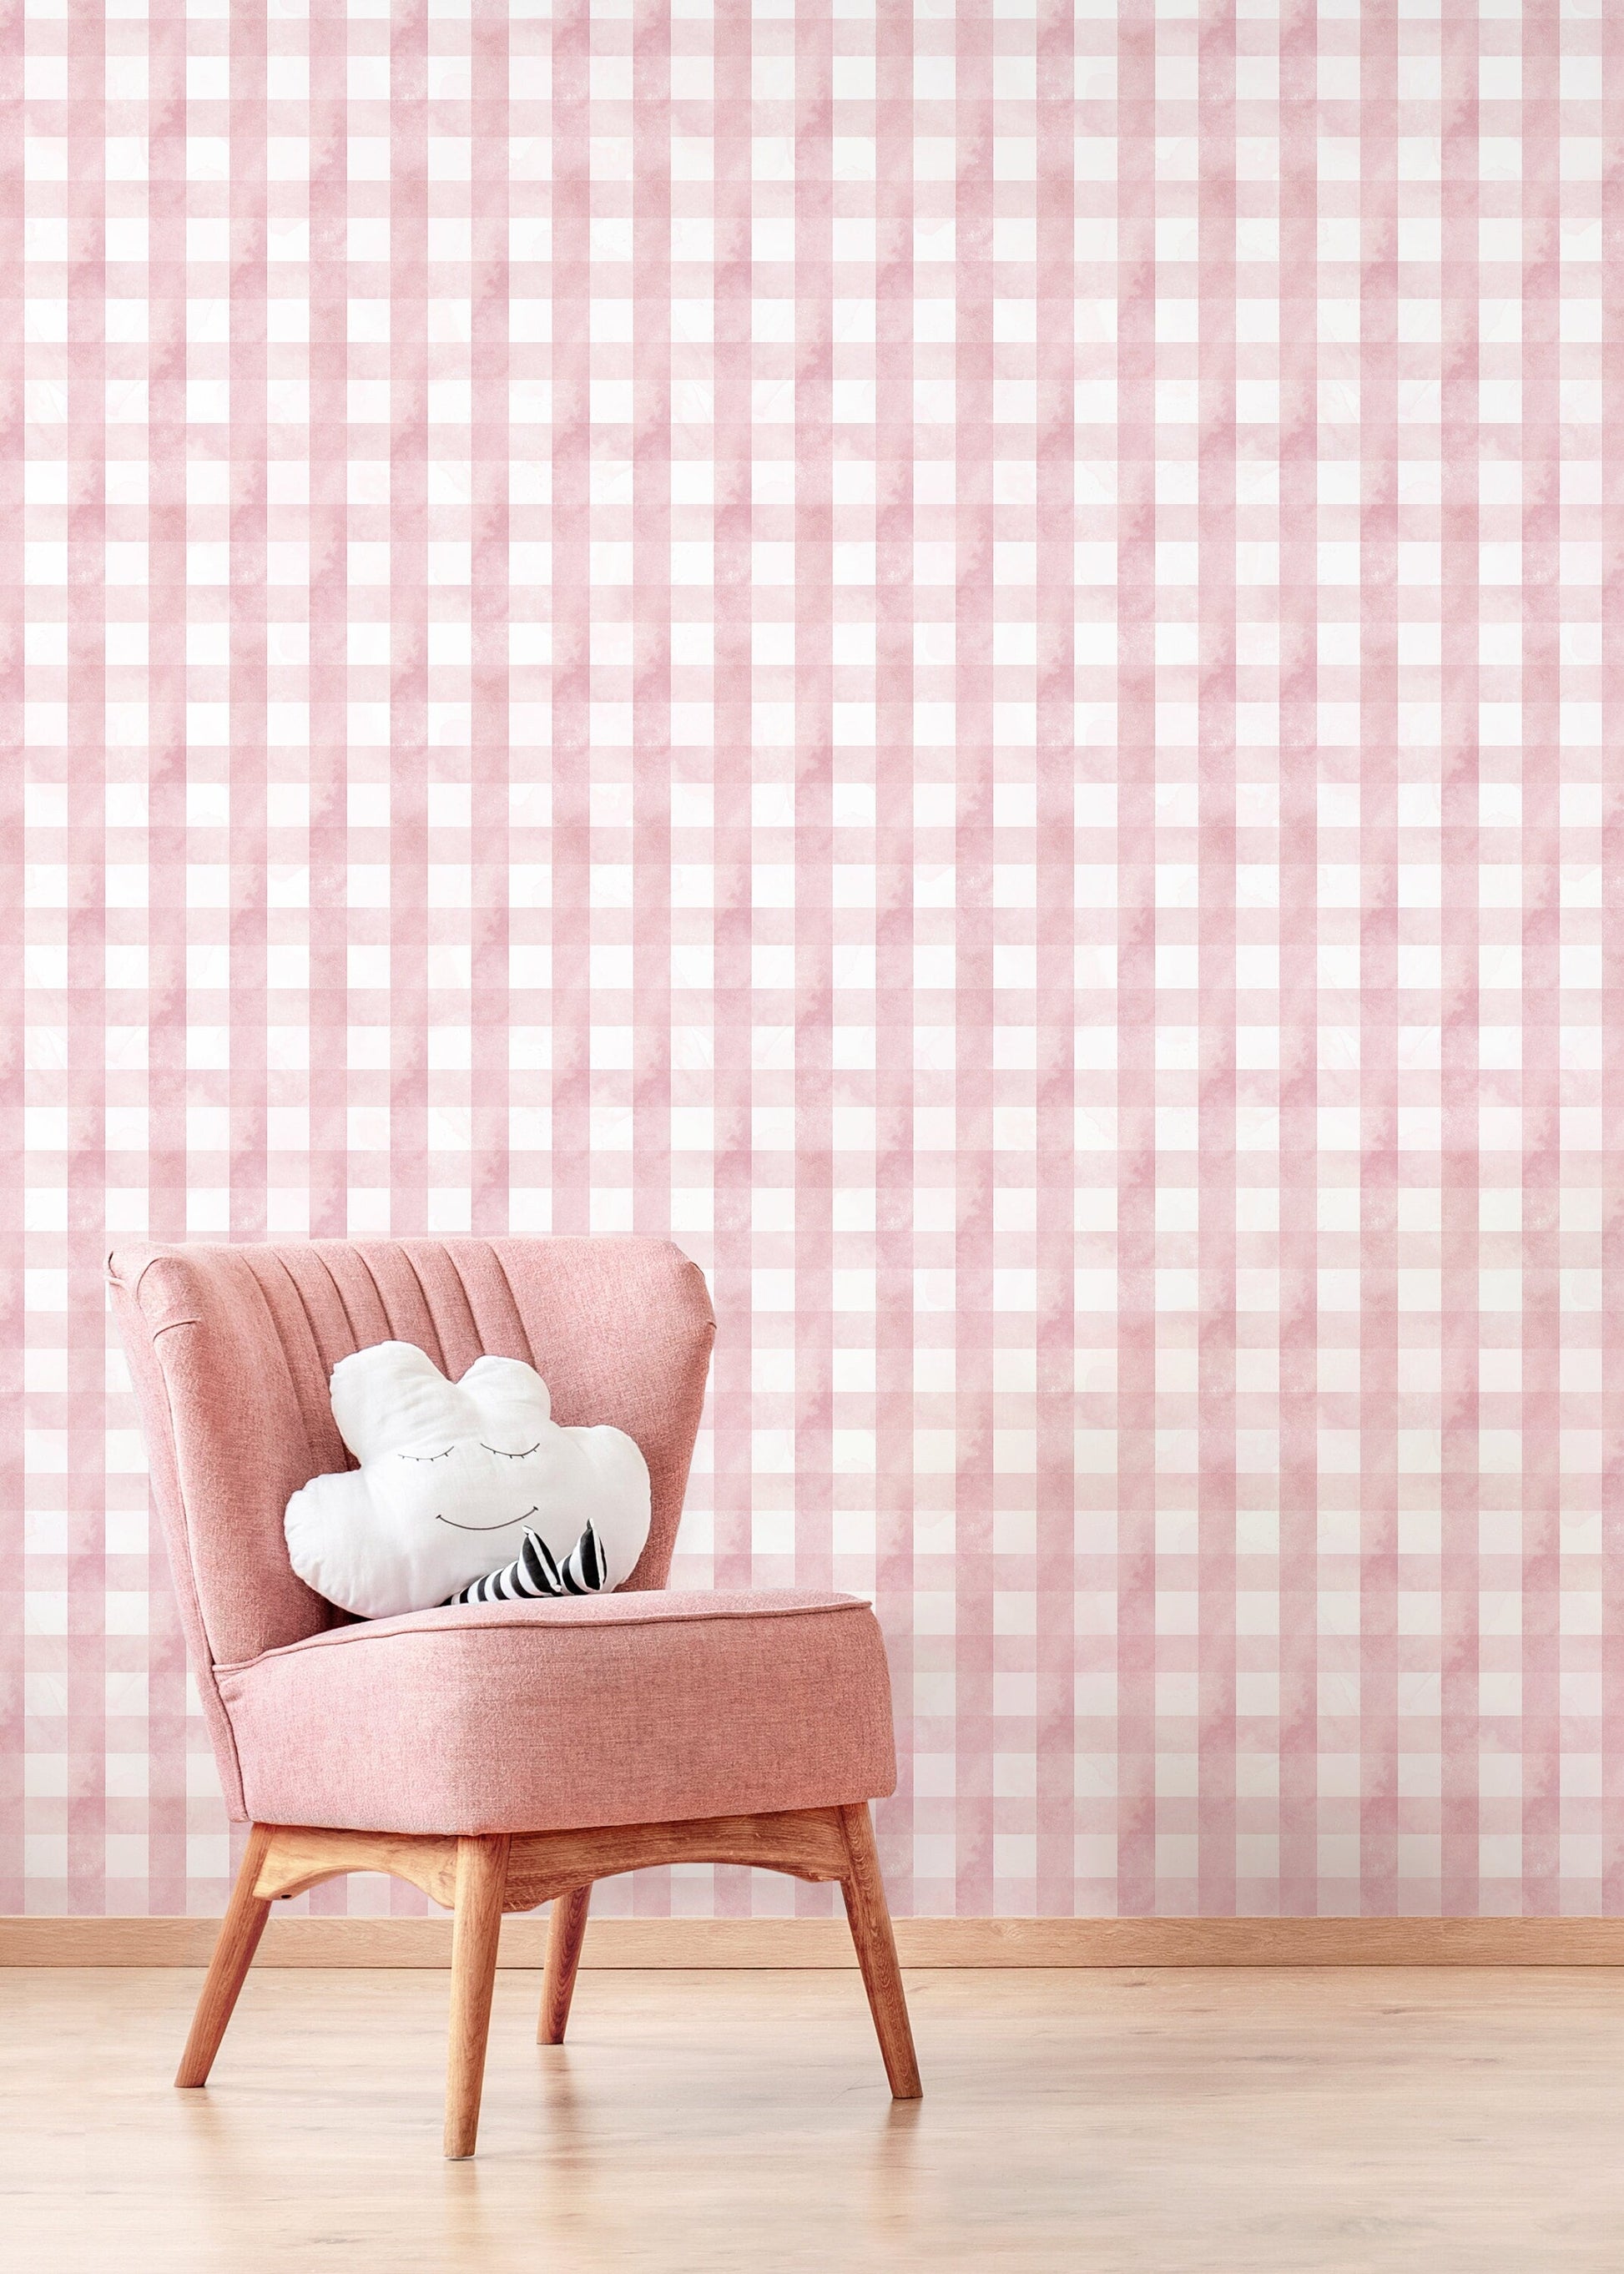 Pink Gingham Wallpaper / Peel and Stick Wallpaper Removable Wallpaper Home Decor Wall Art Wall Decor Room Decor - D011